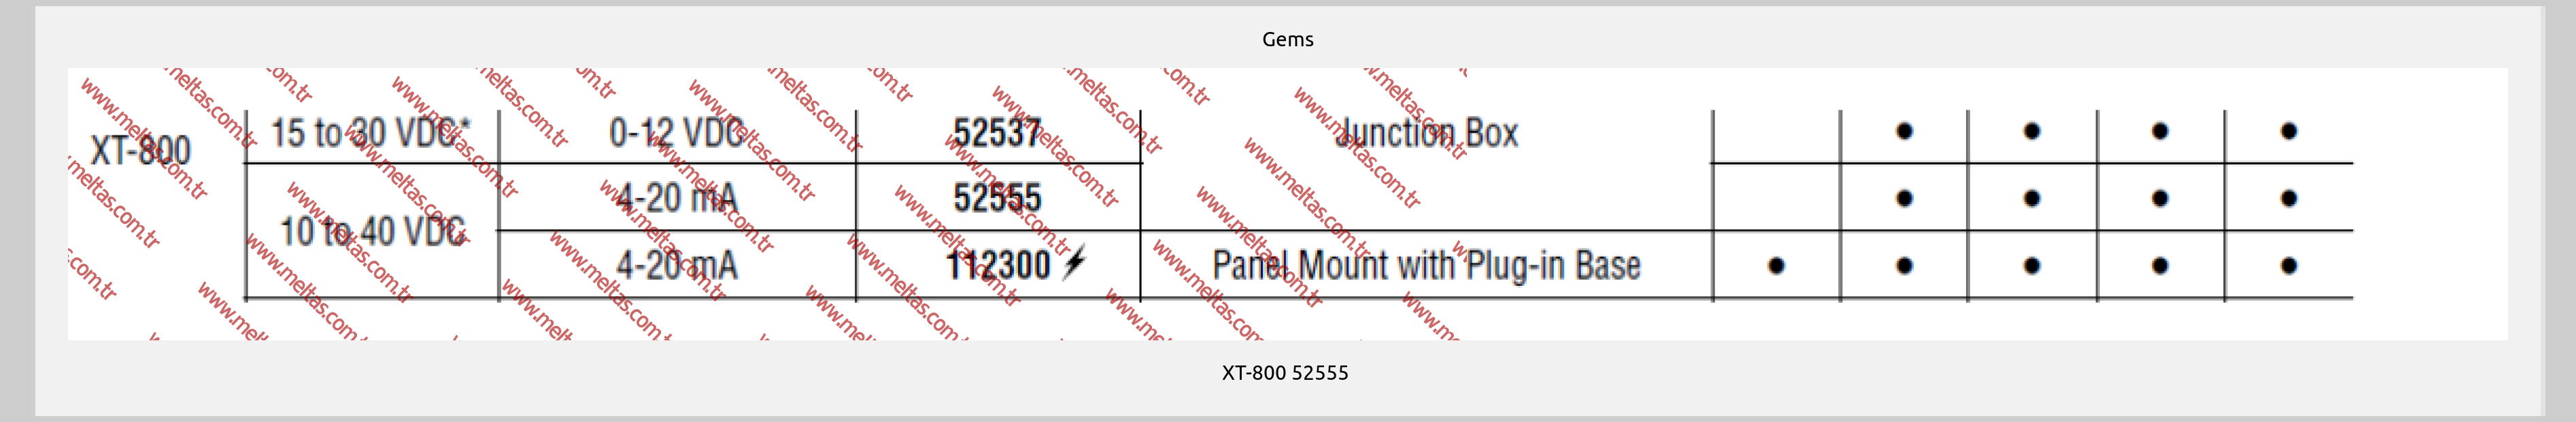 Gems - XT-800 52555 